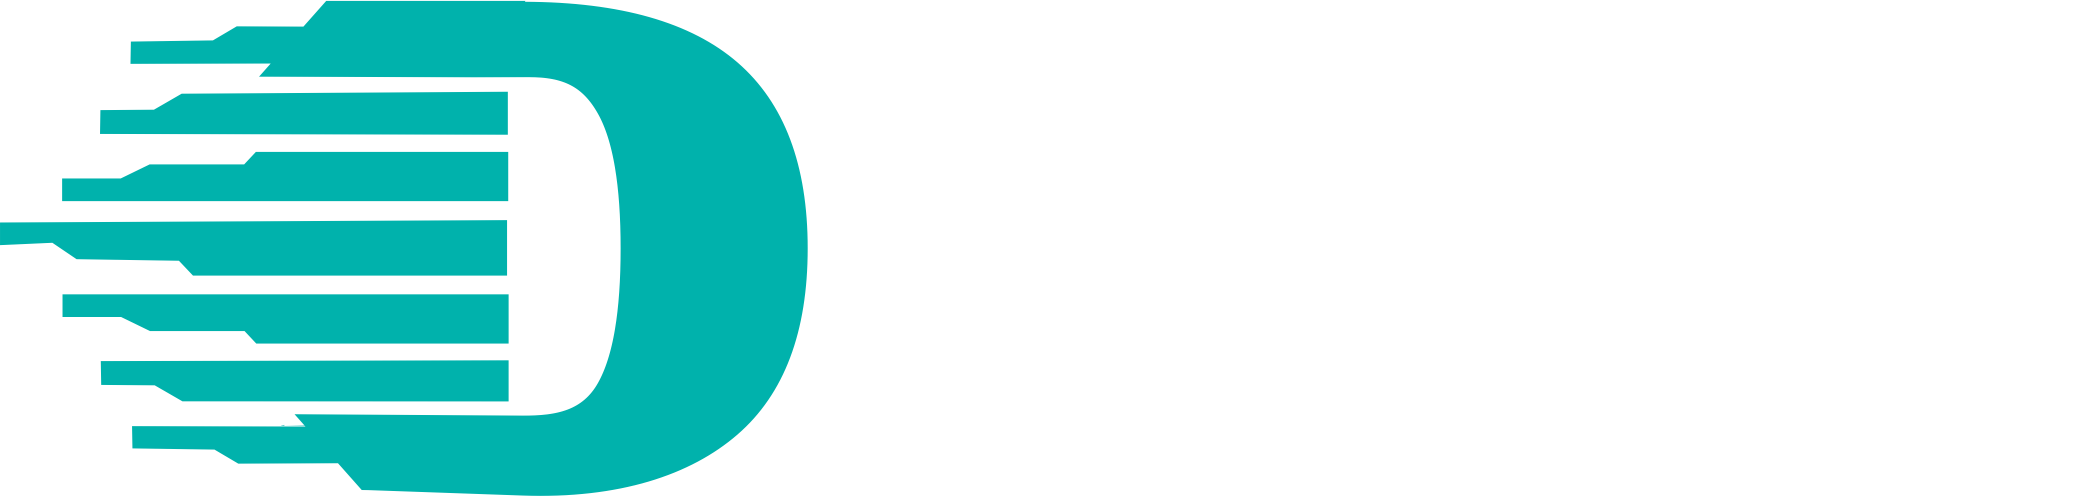 KINETIC MOBILE I 深圳市动能无线传媒有限公司